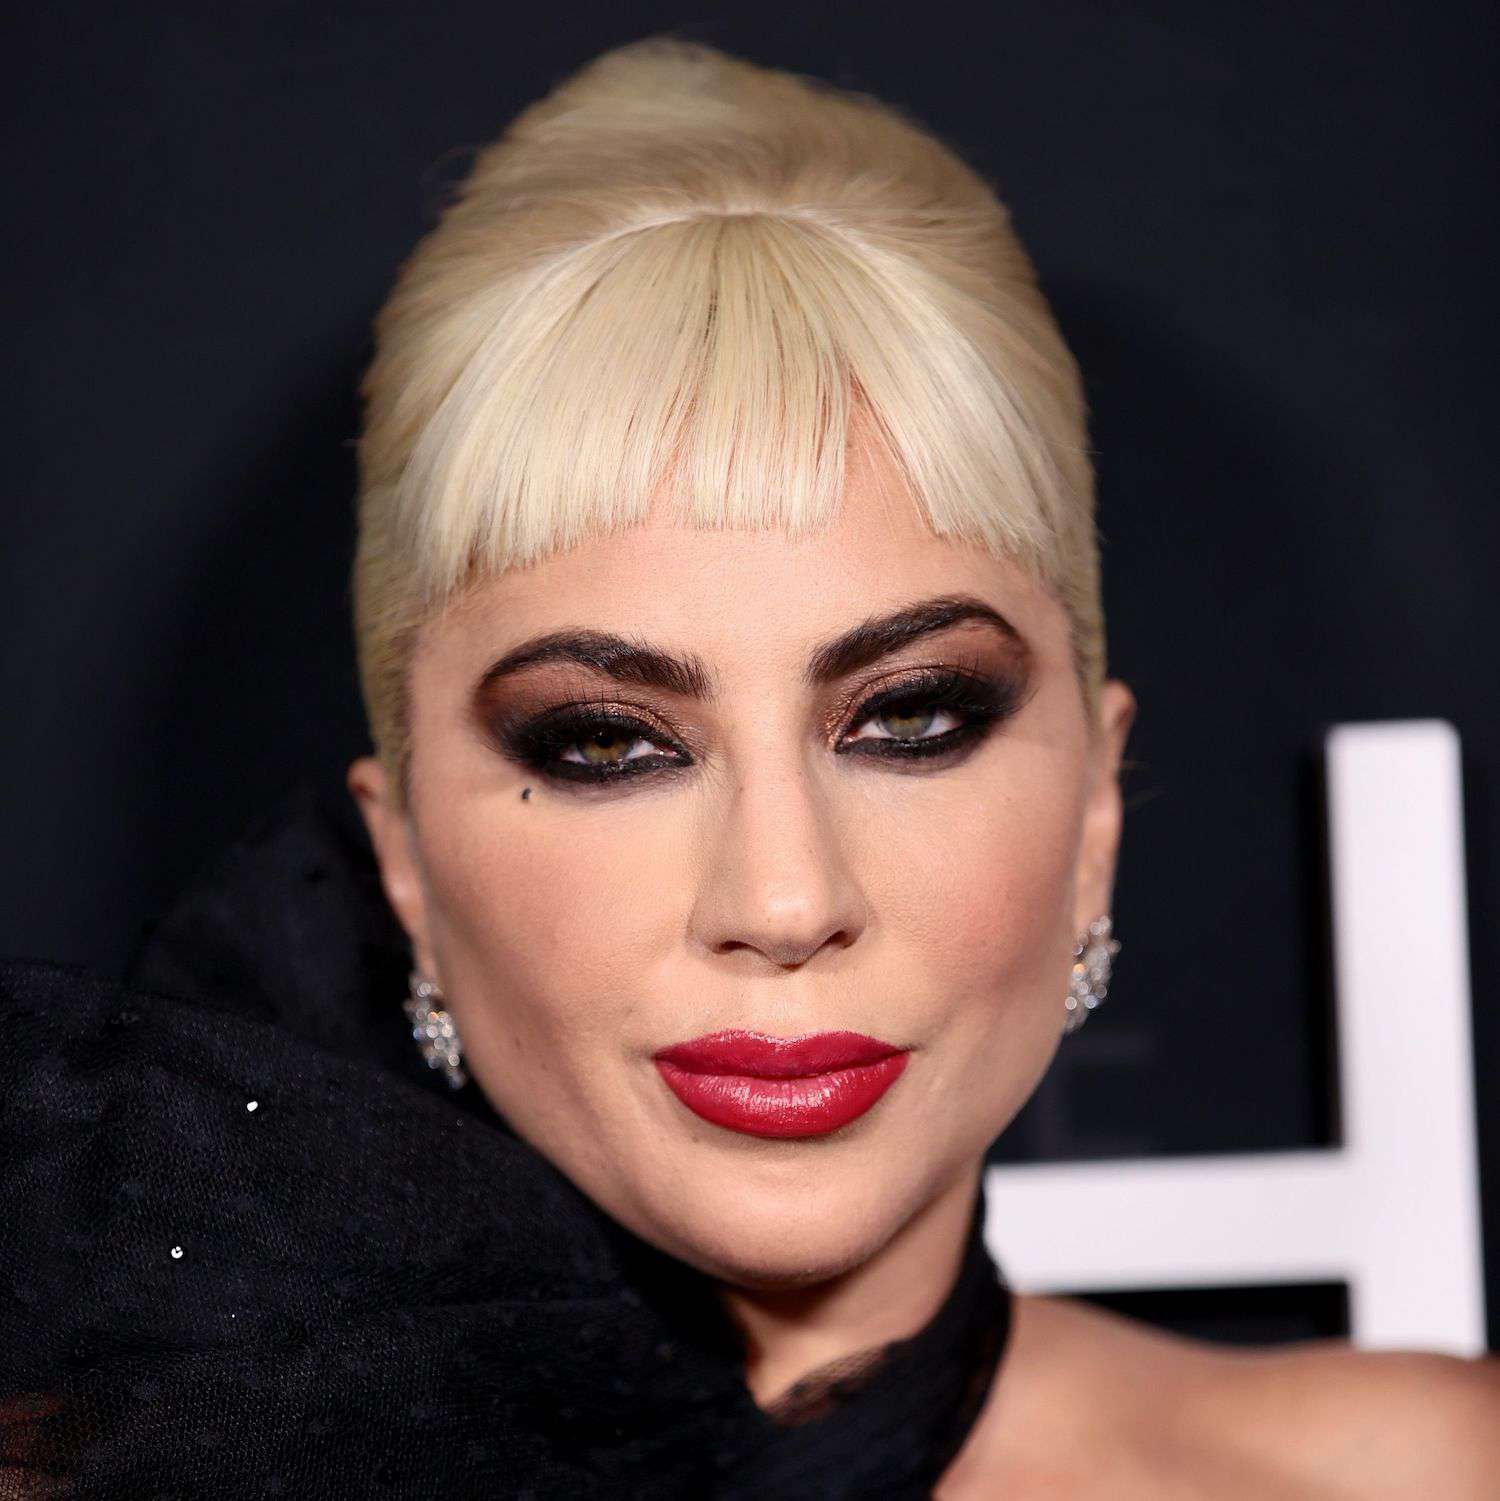 Lady Gaga wears sleek platinum baby bangs, a retro updo, and dramatic eyeshadow